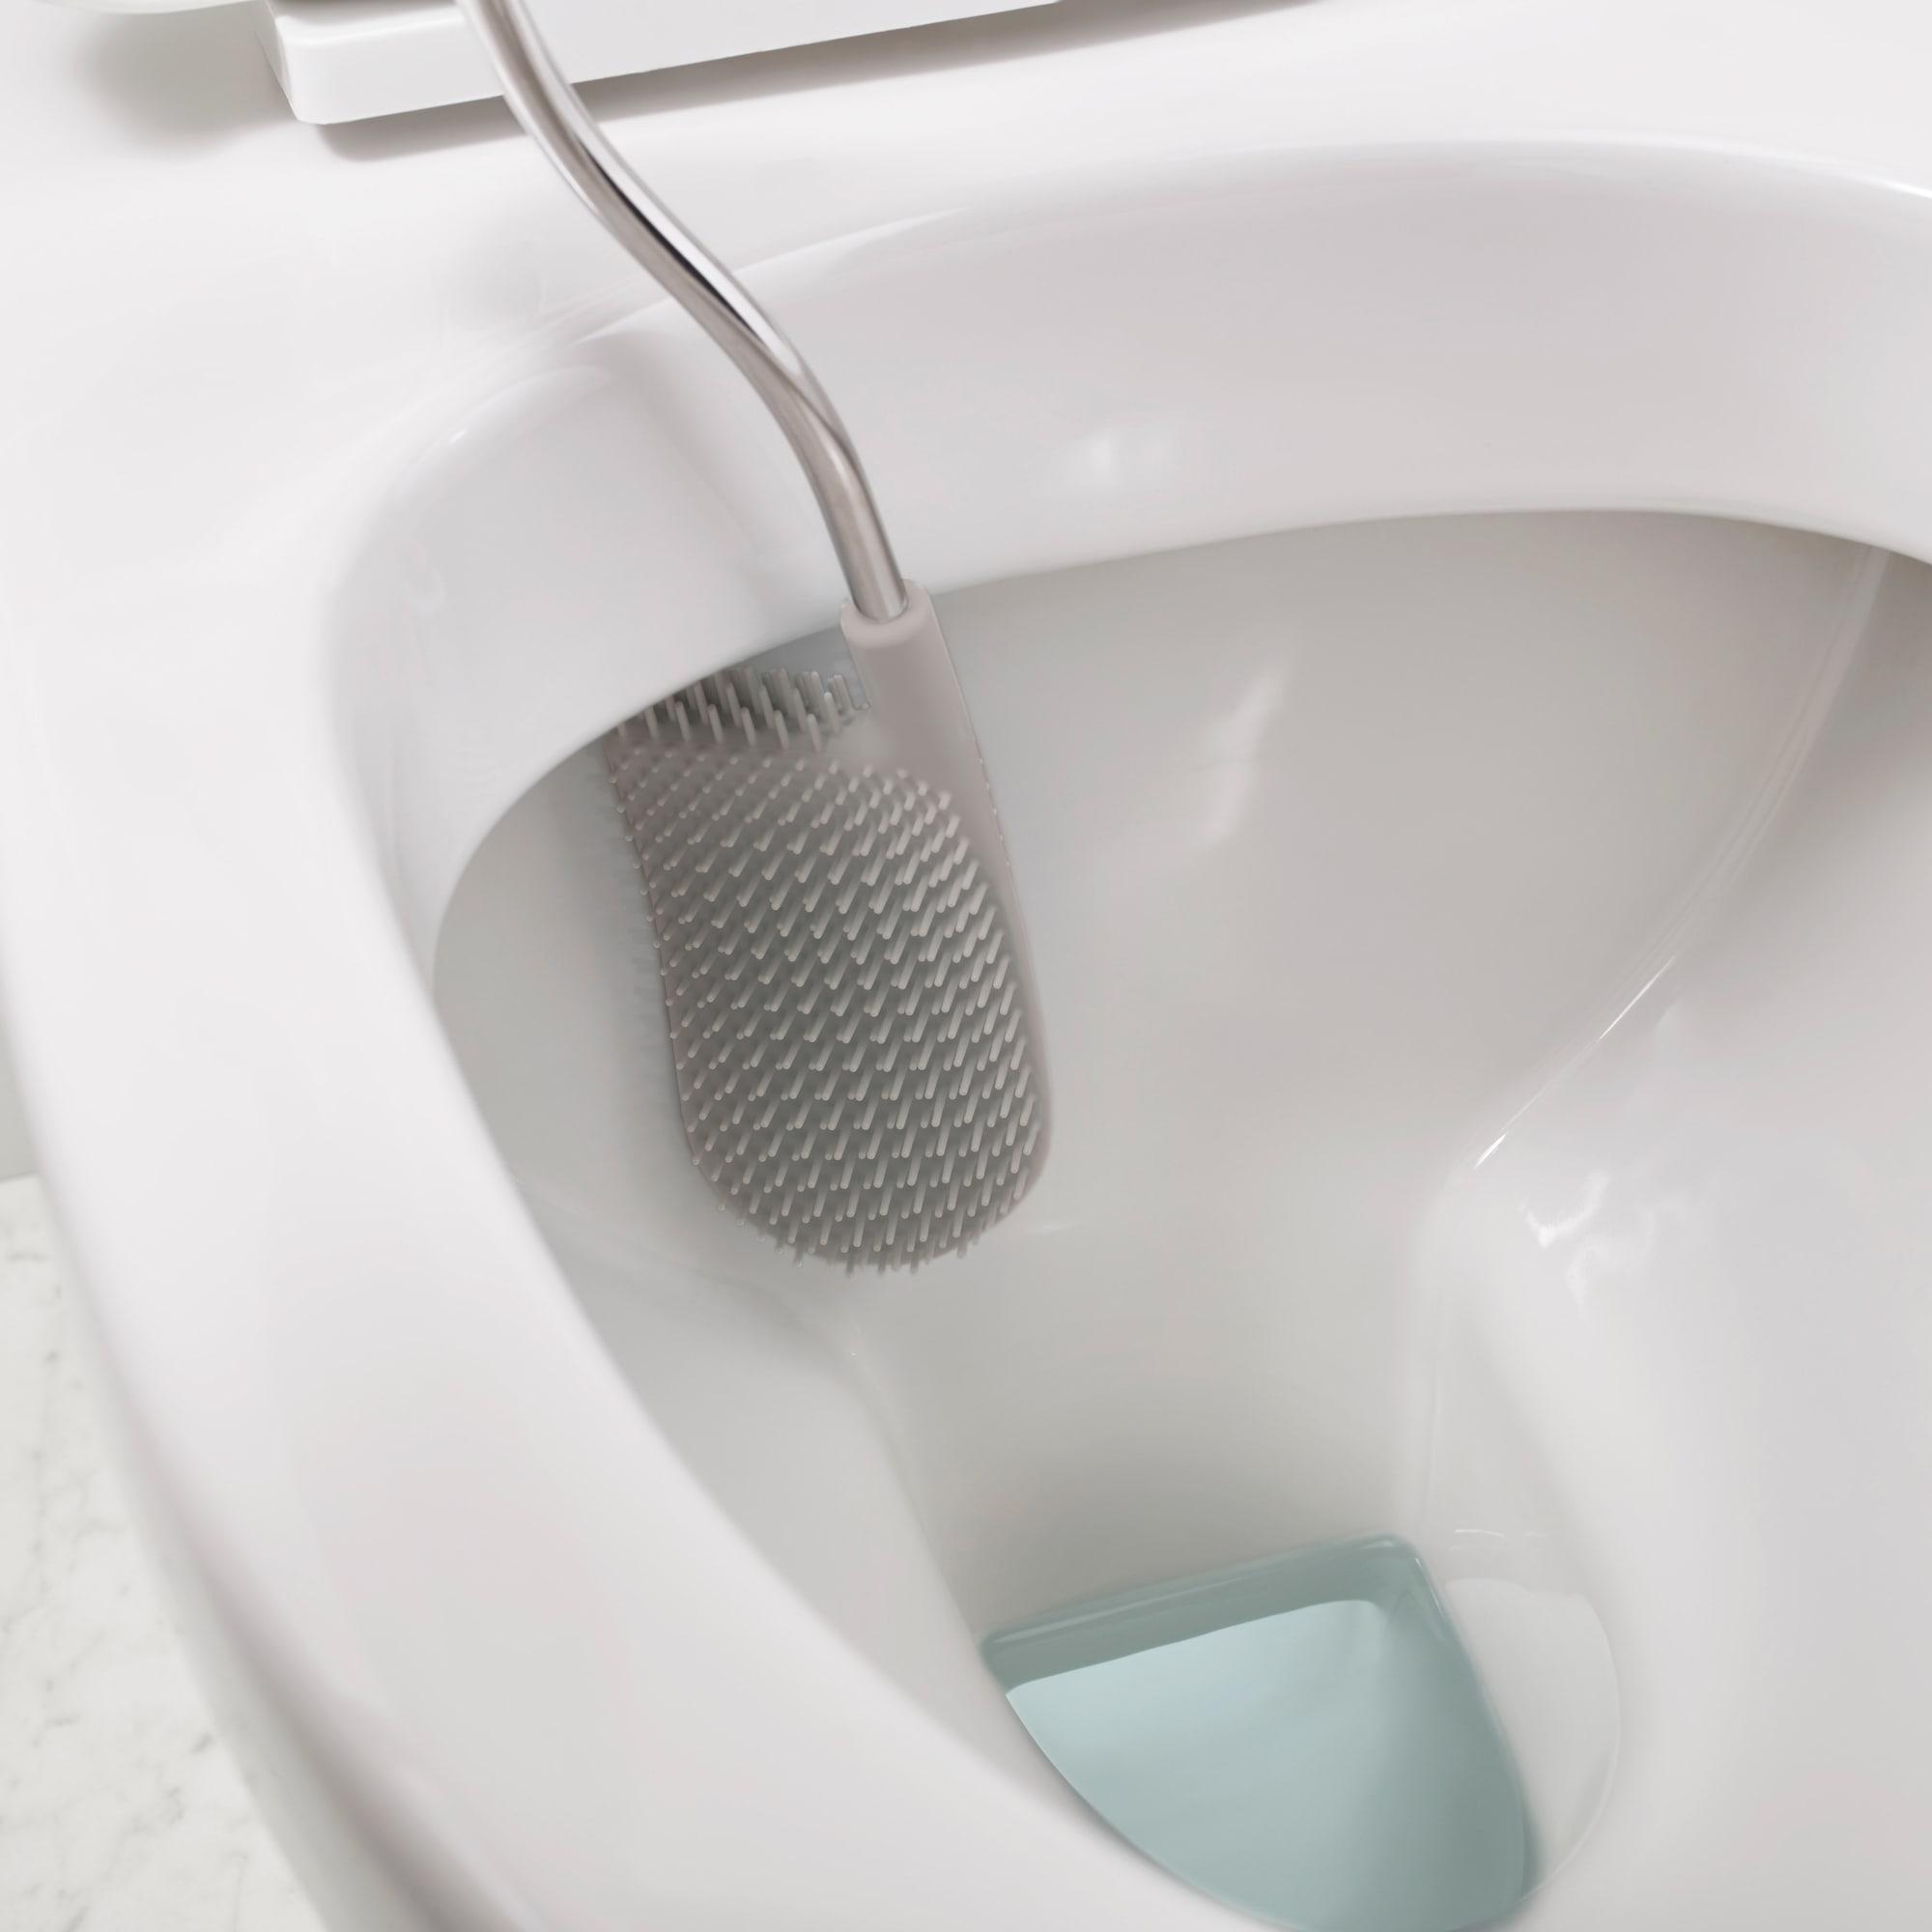 Joseph Joseph Flex Plus Toilet Brush with Storage Caddy Grey Image 4